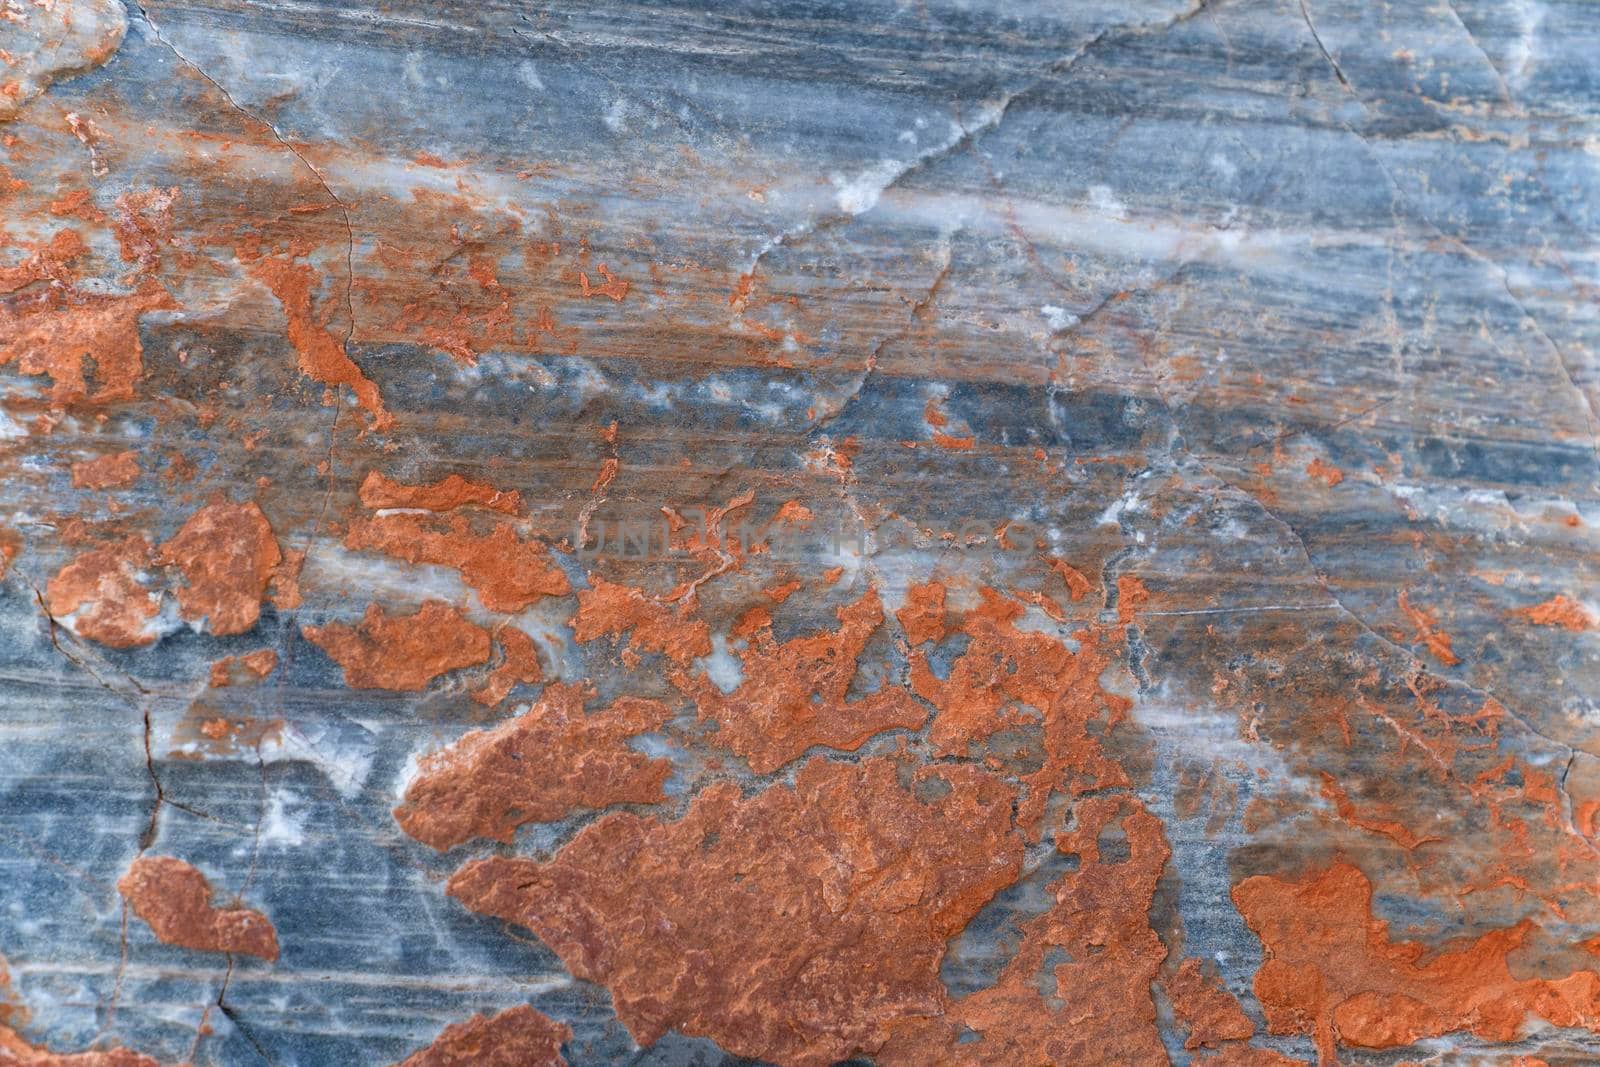 Orange rust coating on gray surface of stone. Texture. by Laguna781